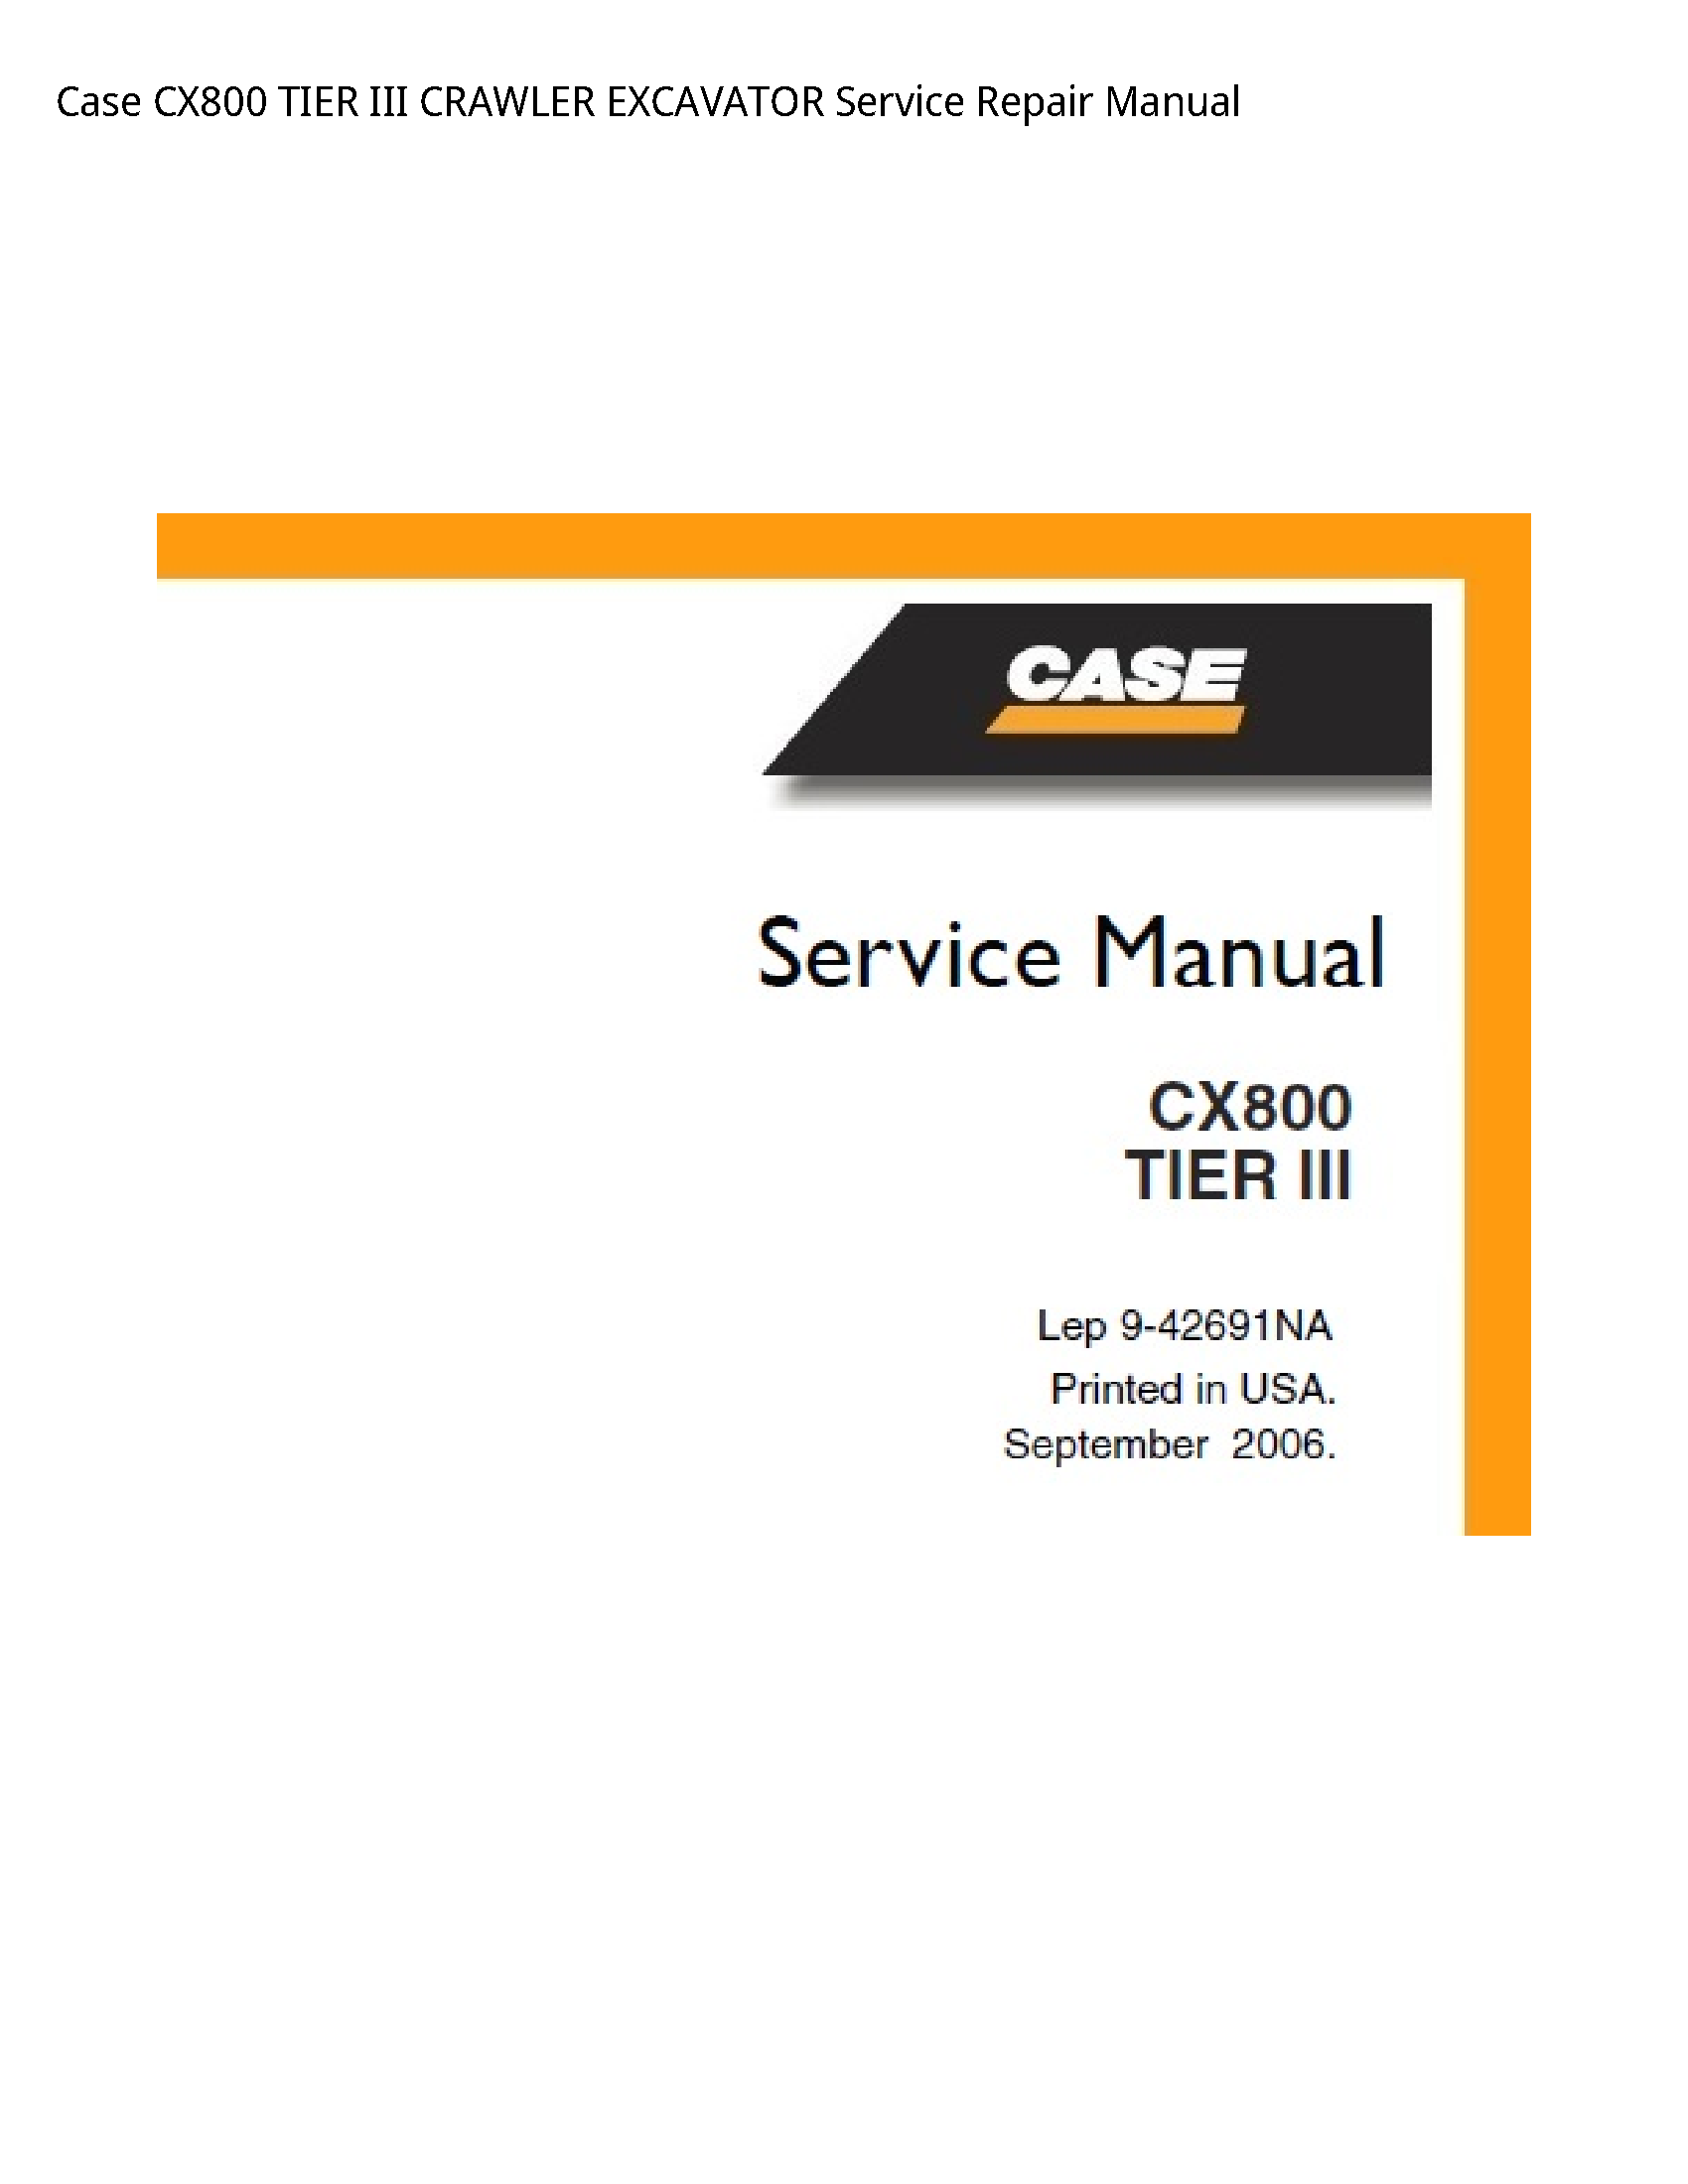 Case/Case IH CX800 TIER III CRAWLER EXCAVATOR manual